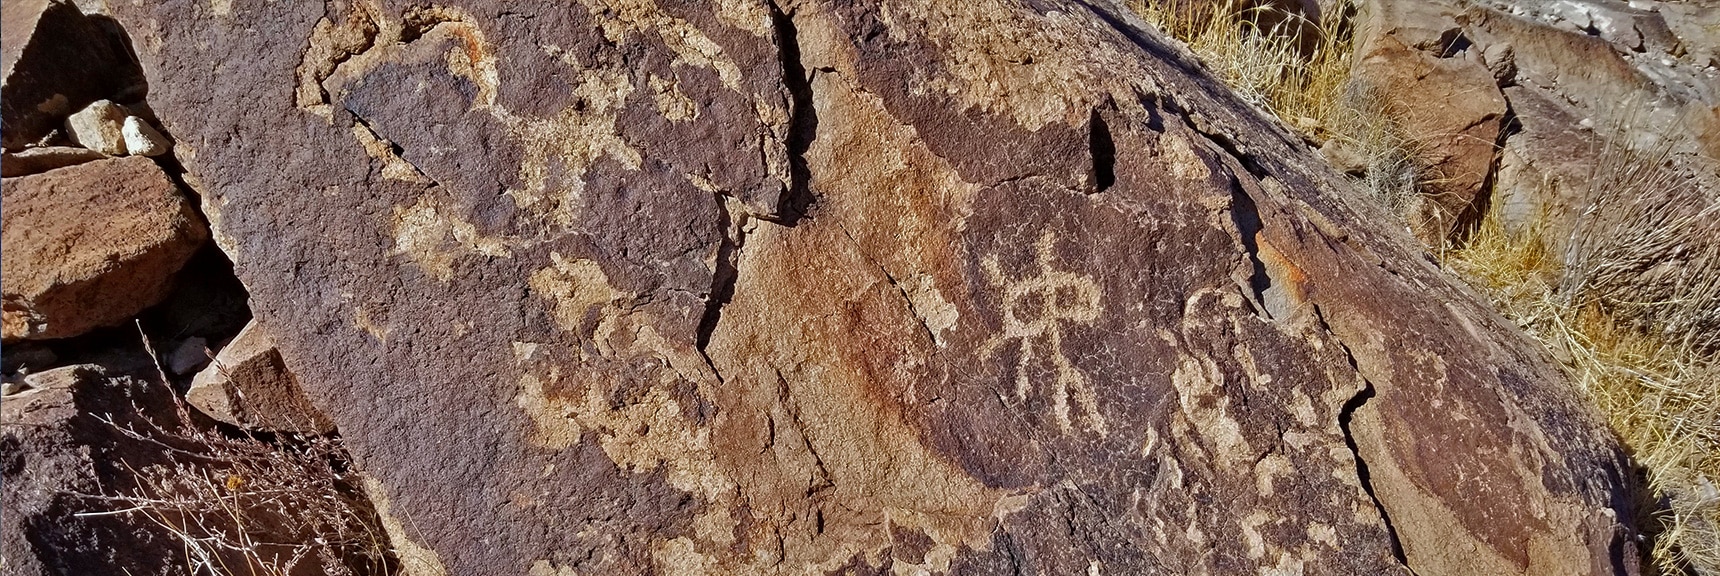 | Petroglyph Canyon | Sloan Canyon National Conservation Area, Nevada